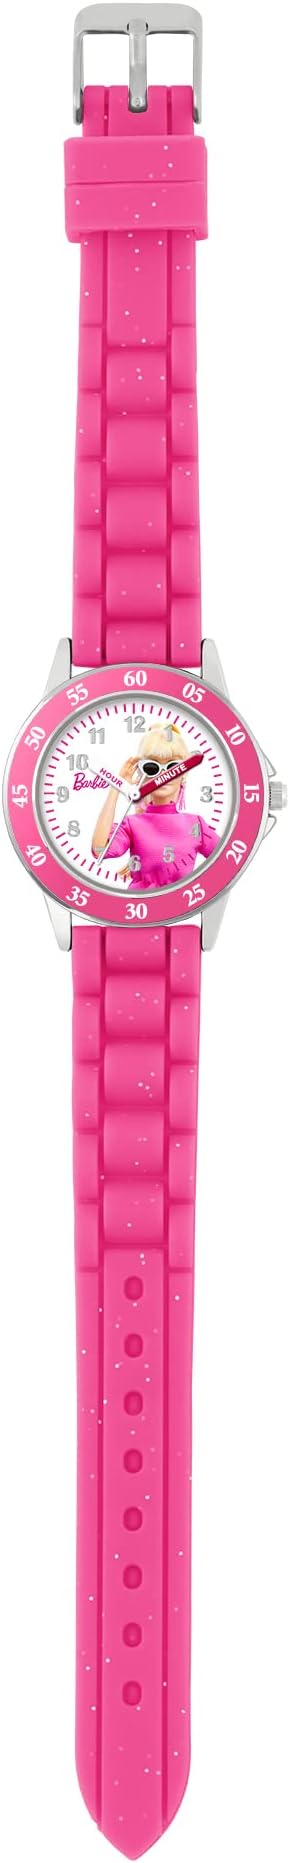 Peers Hardy - Barbie Pink Time Teacher Watch